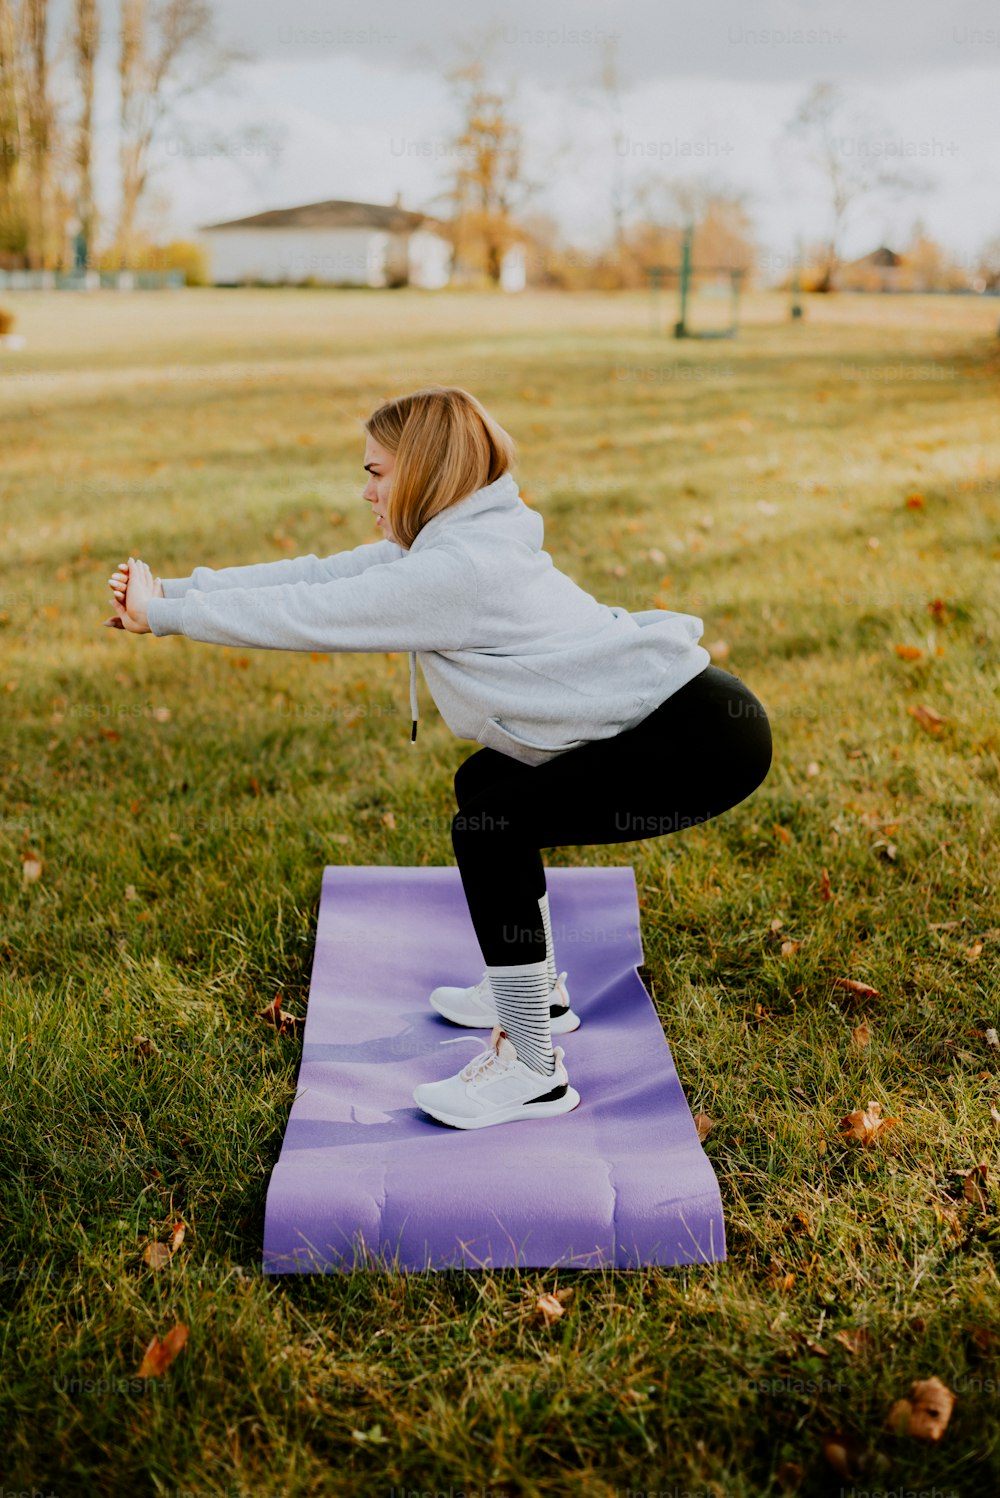 a woman doing a yoga pose on a purple mat